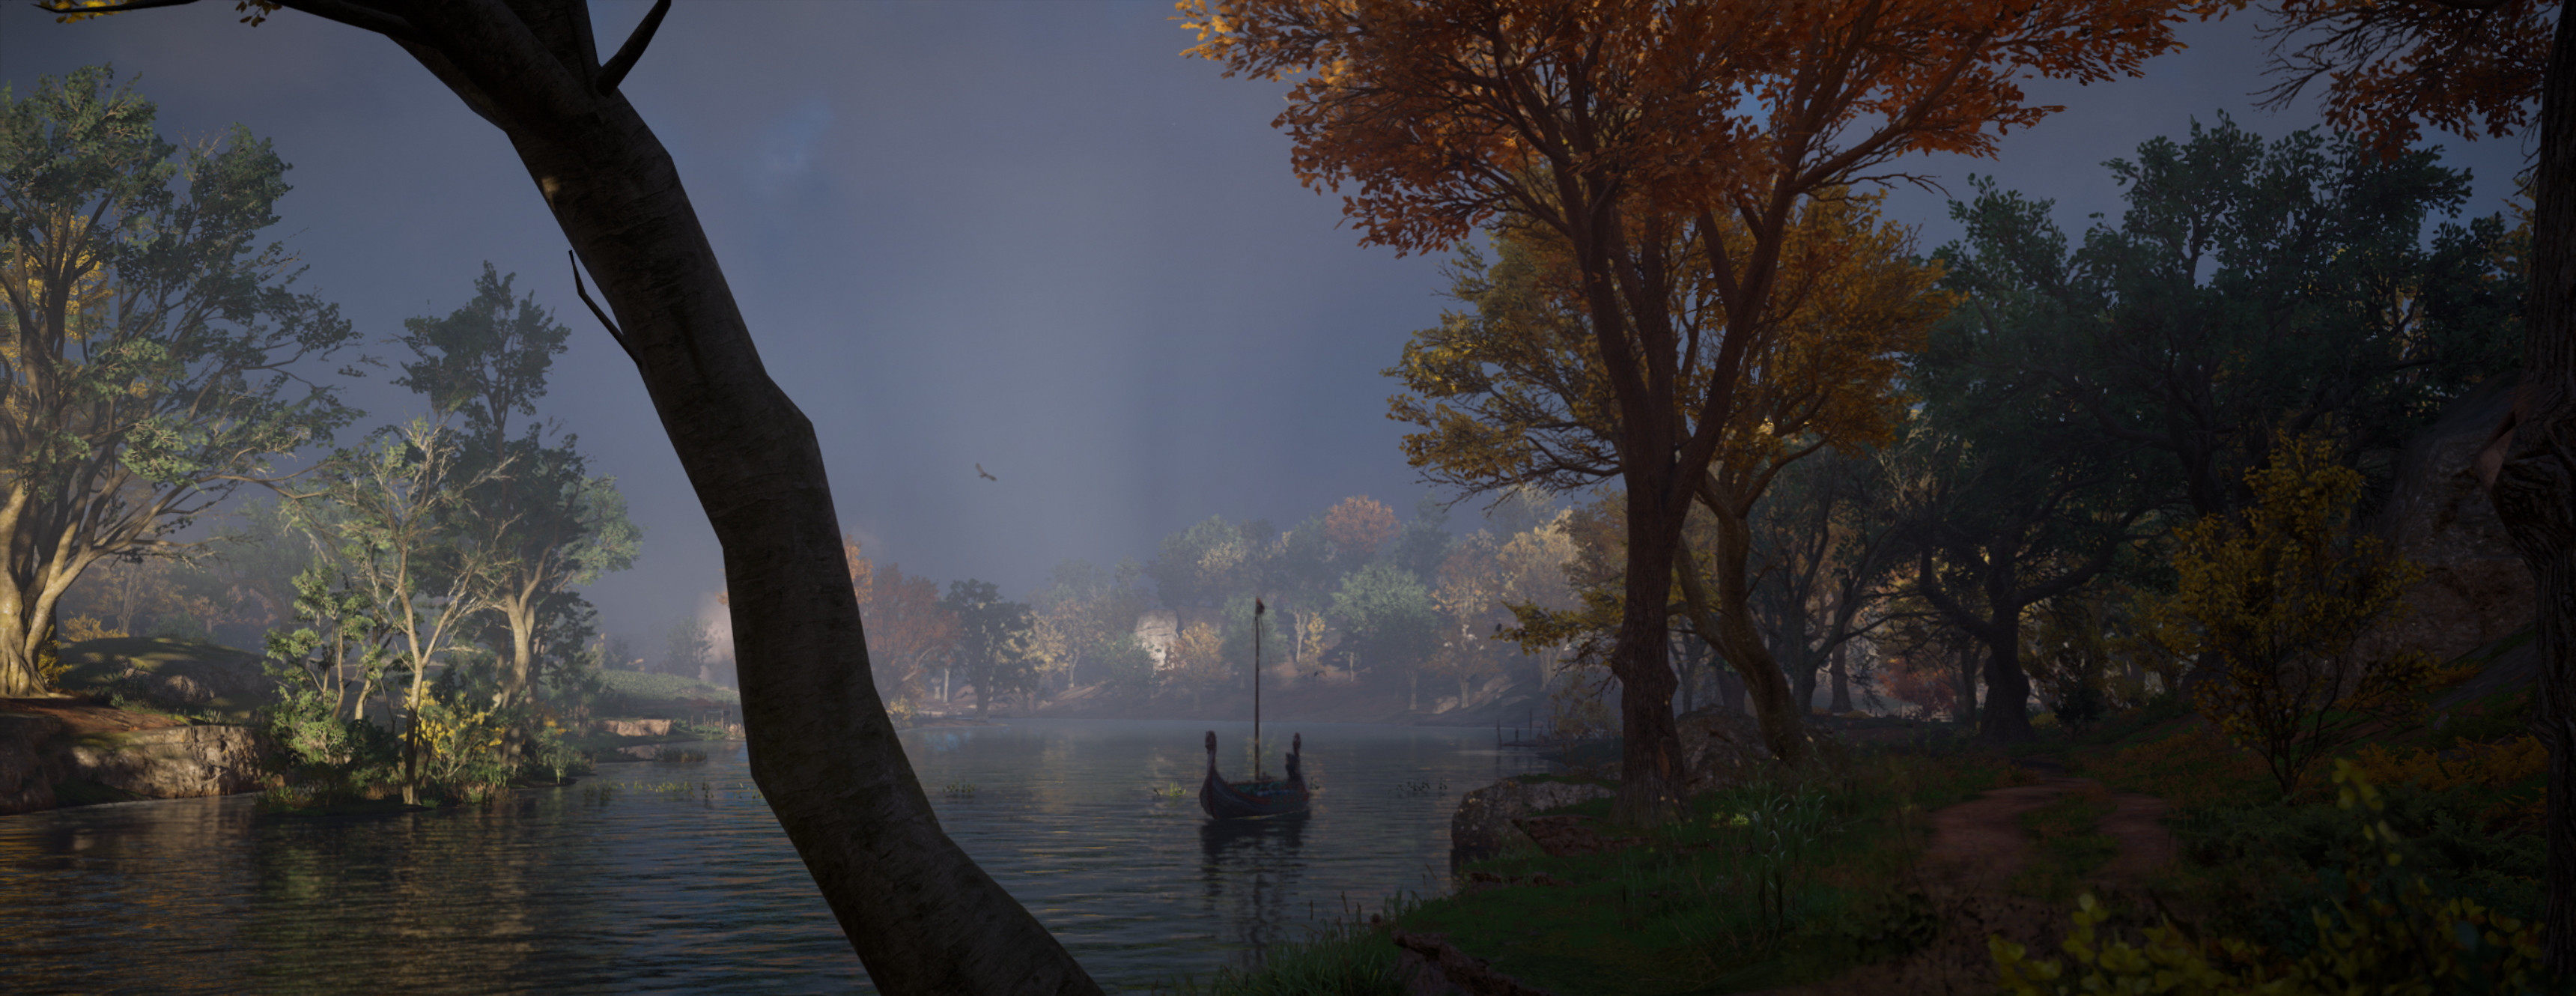 Assassins Creed Valhalla Assassins Creed Landscape Water Sky Trees Fall Boat Longships PC Gaming Vid 3440x1330